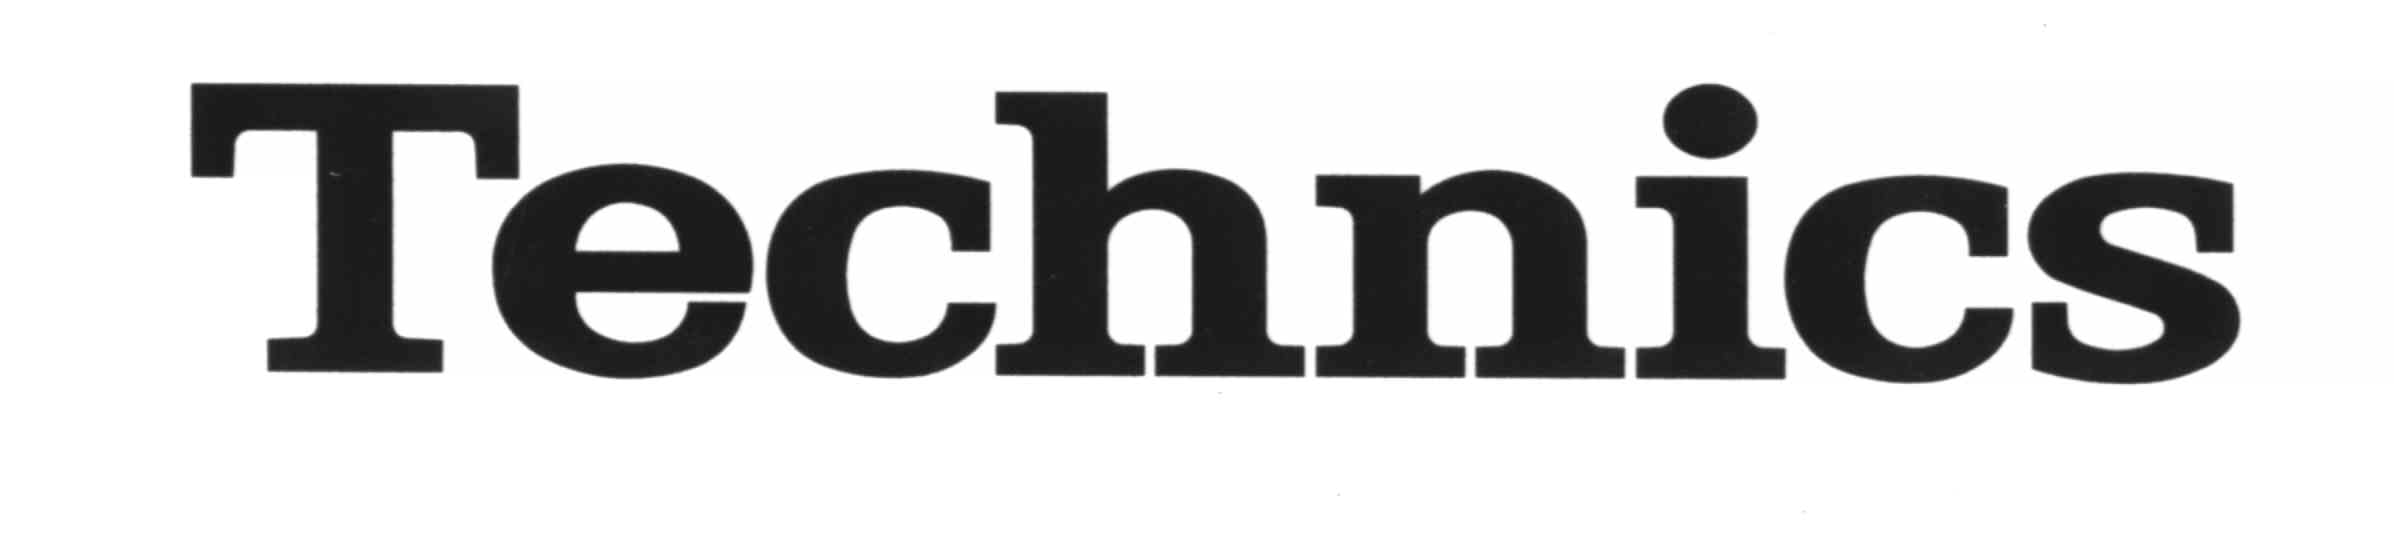 Technics Logo photo - 1